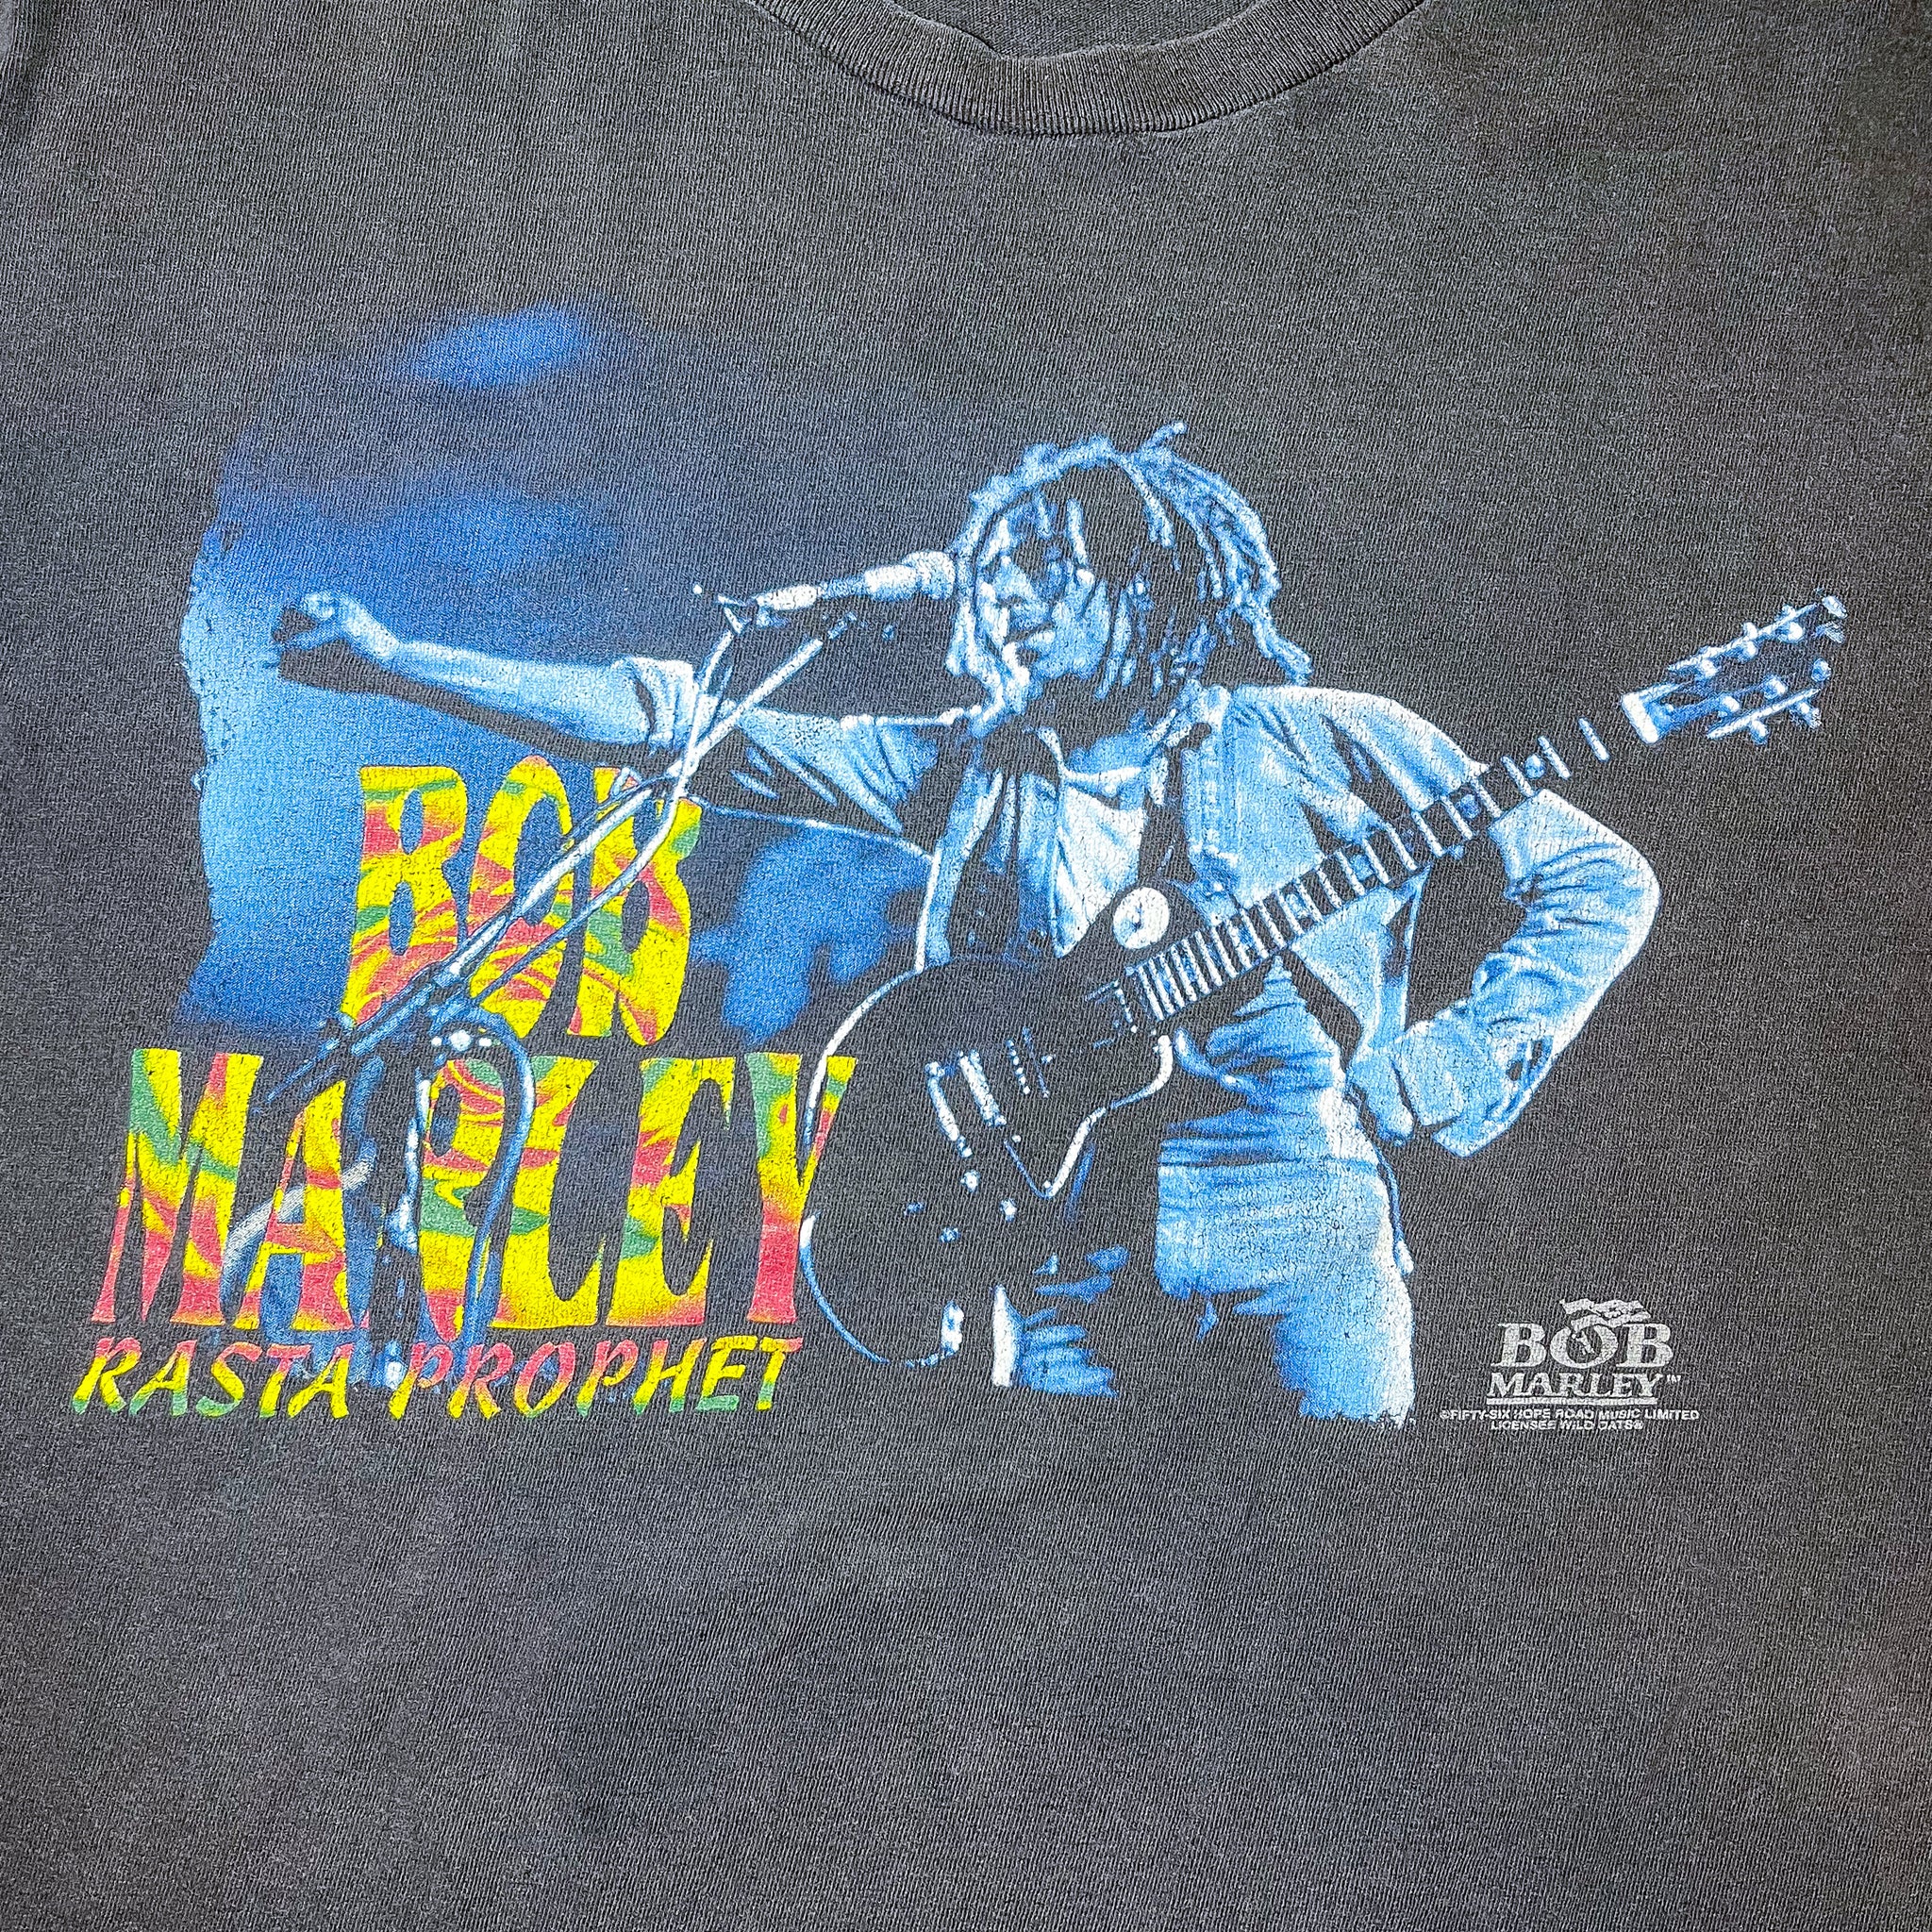 Bob Marley Vintage Tee “Rasta Prophet”